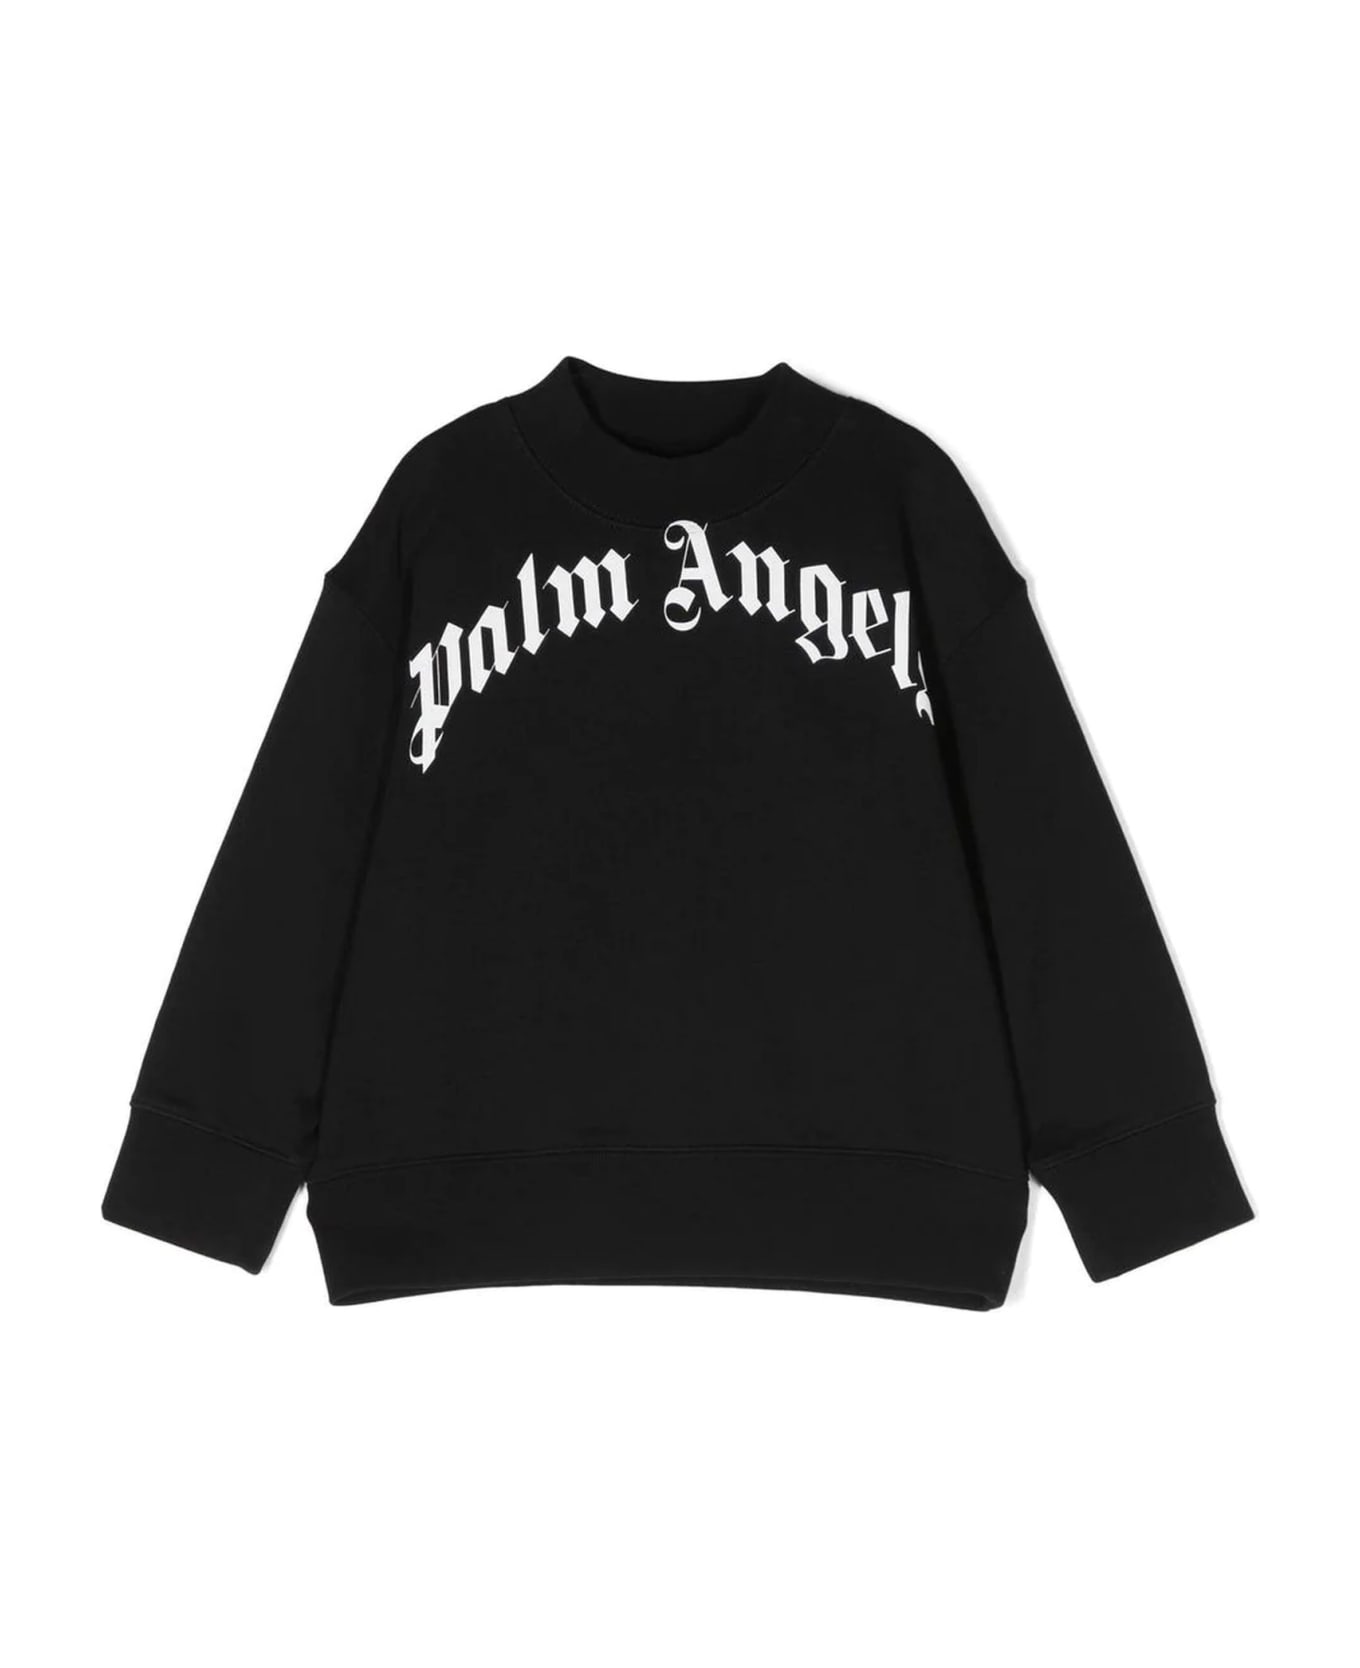 Palm Angels Black Cotton Sweatshirt - Black Whit